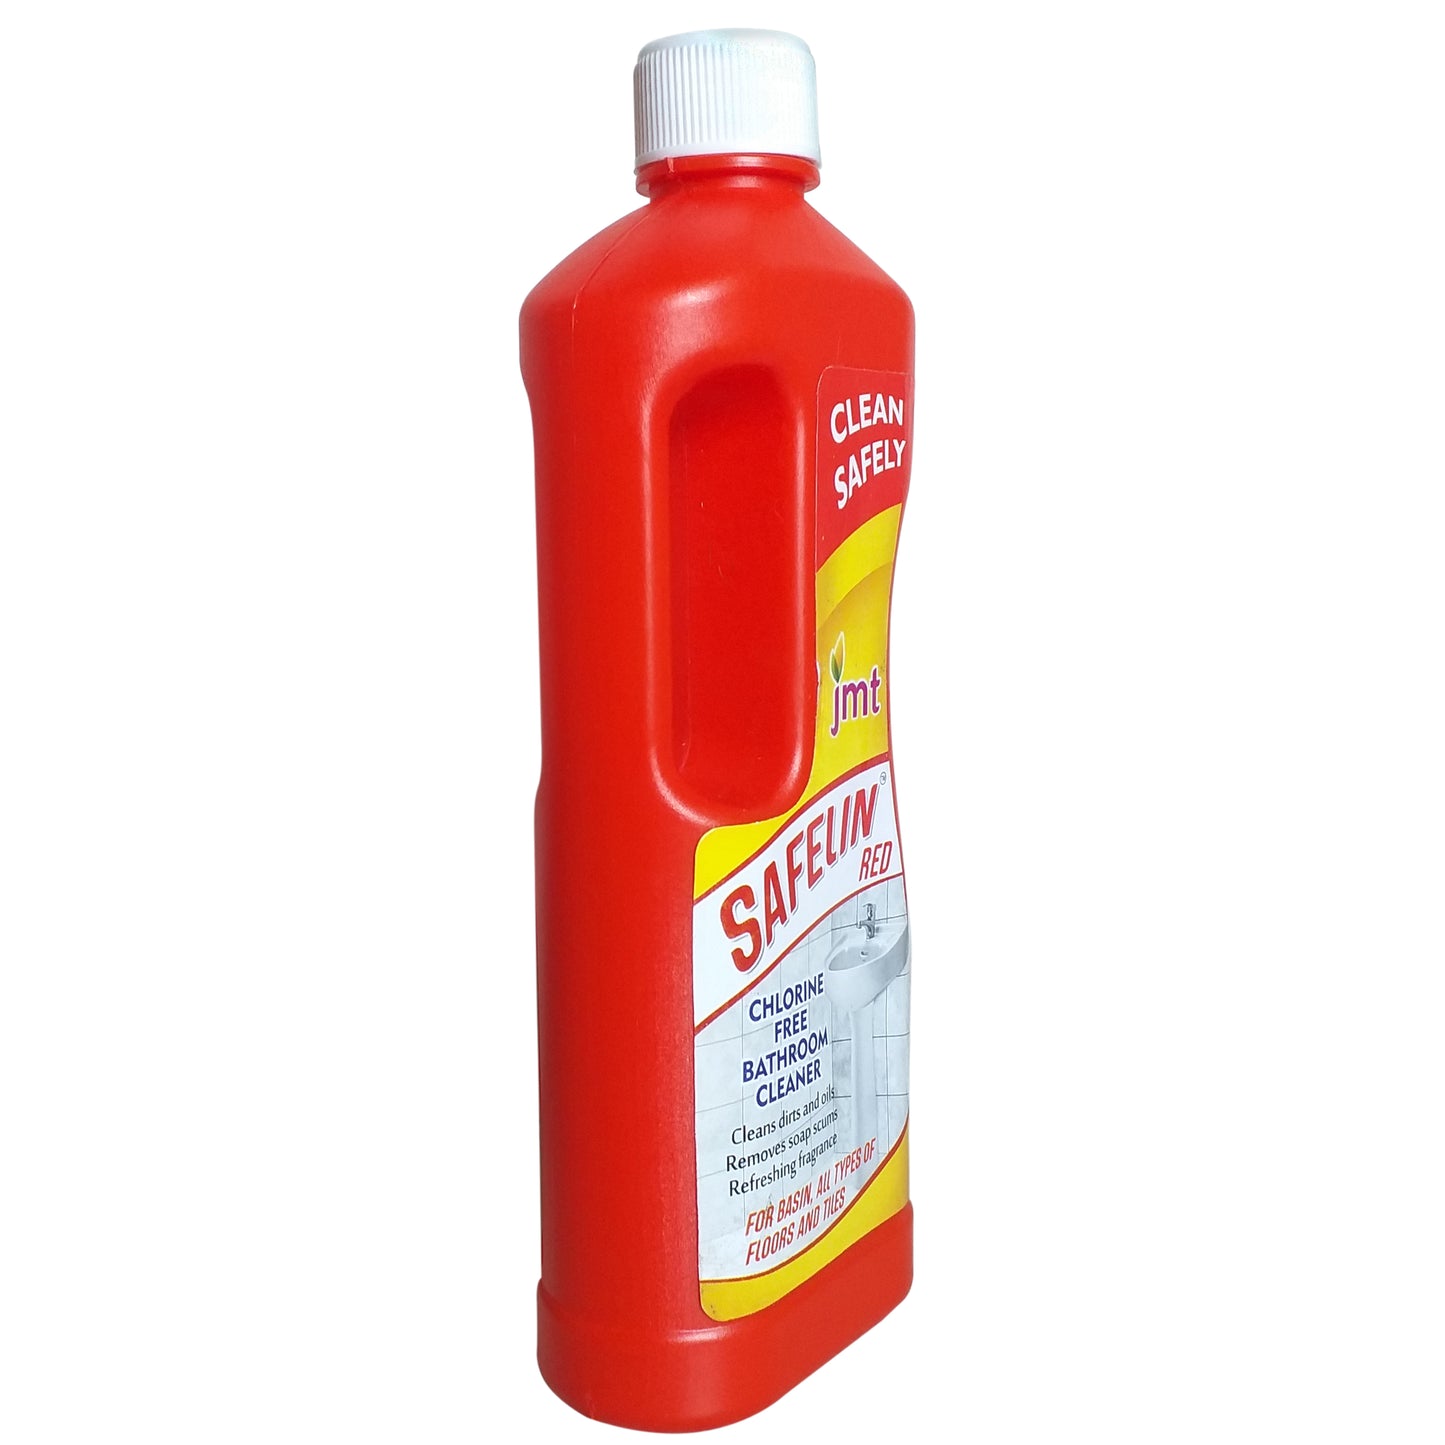 500ml  Safelin Red Chlorine Free Regular Use Bathroom Cleaner for All Types of Bathroom Floors, Tiles and Basins